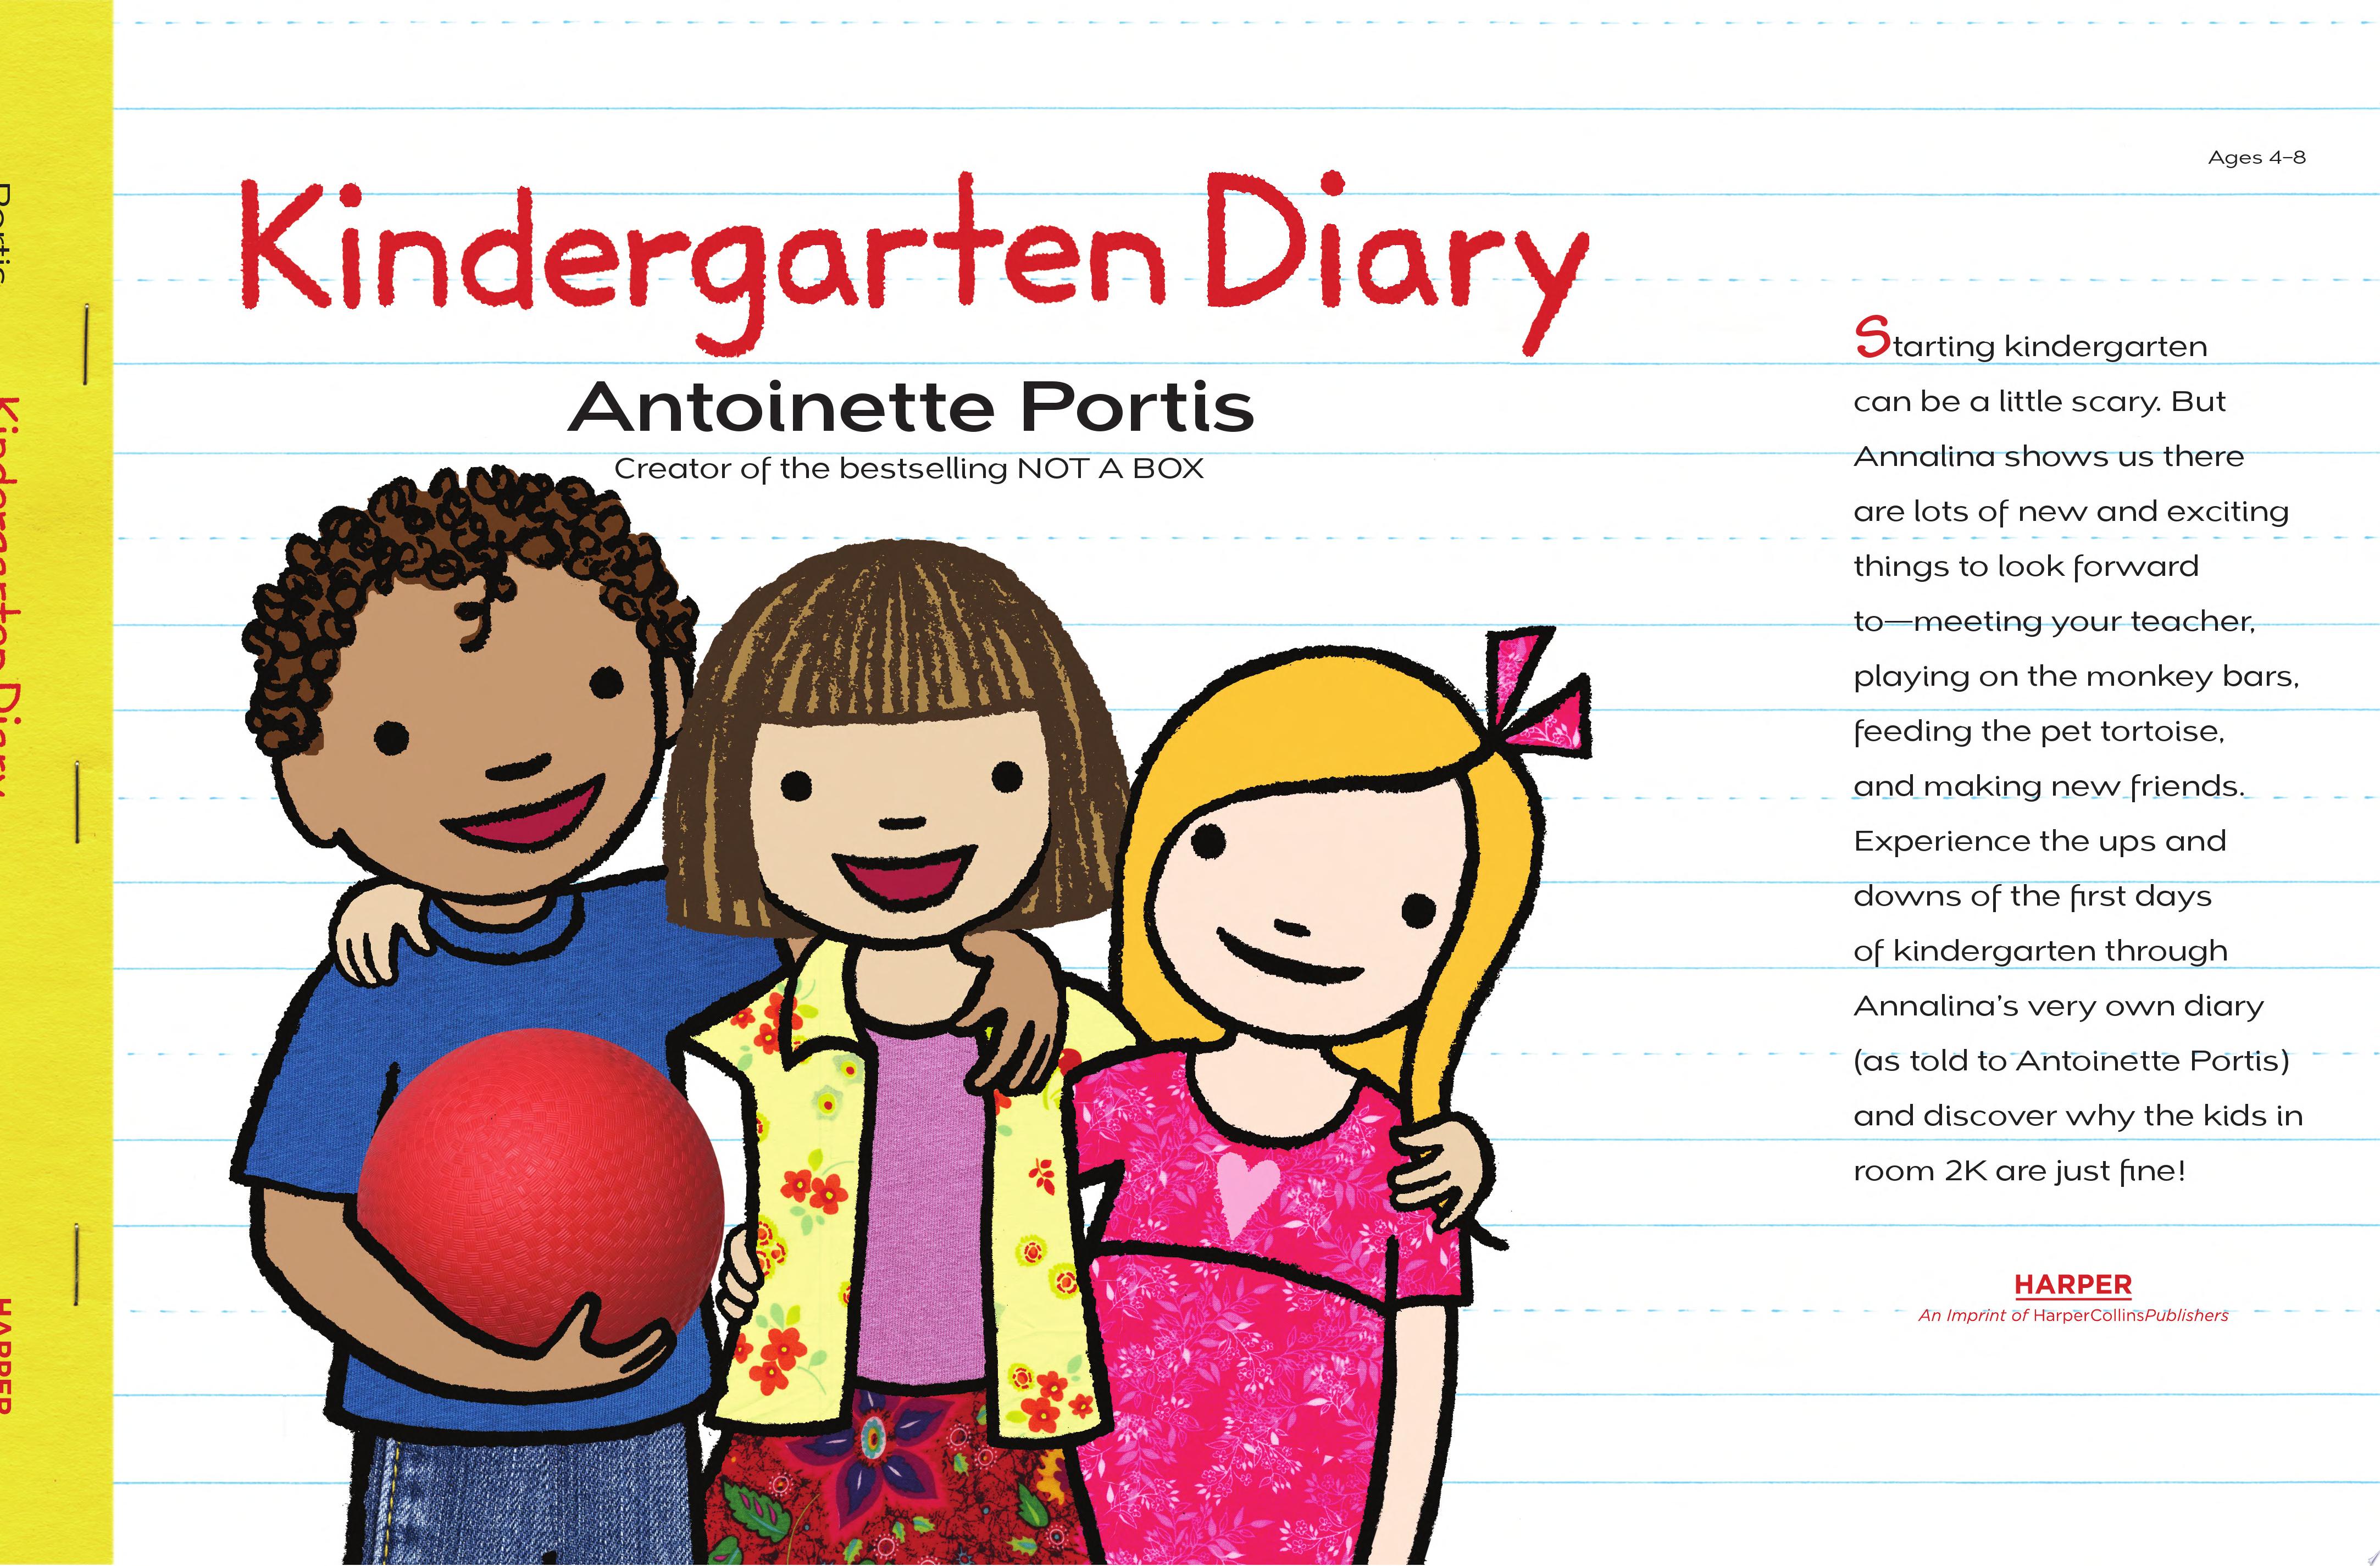 Image for "Kindergarten Diary"